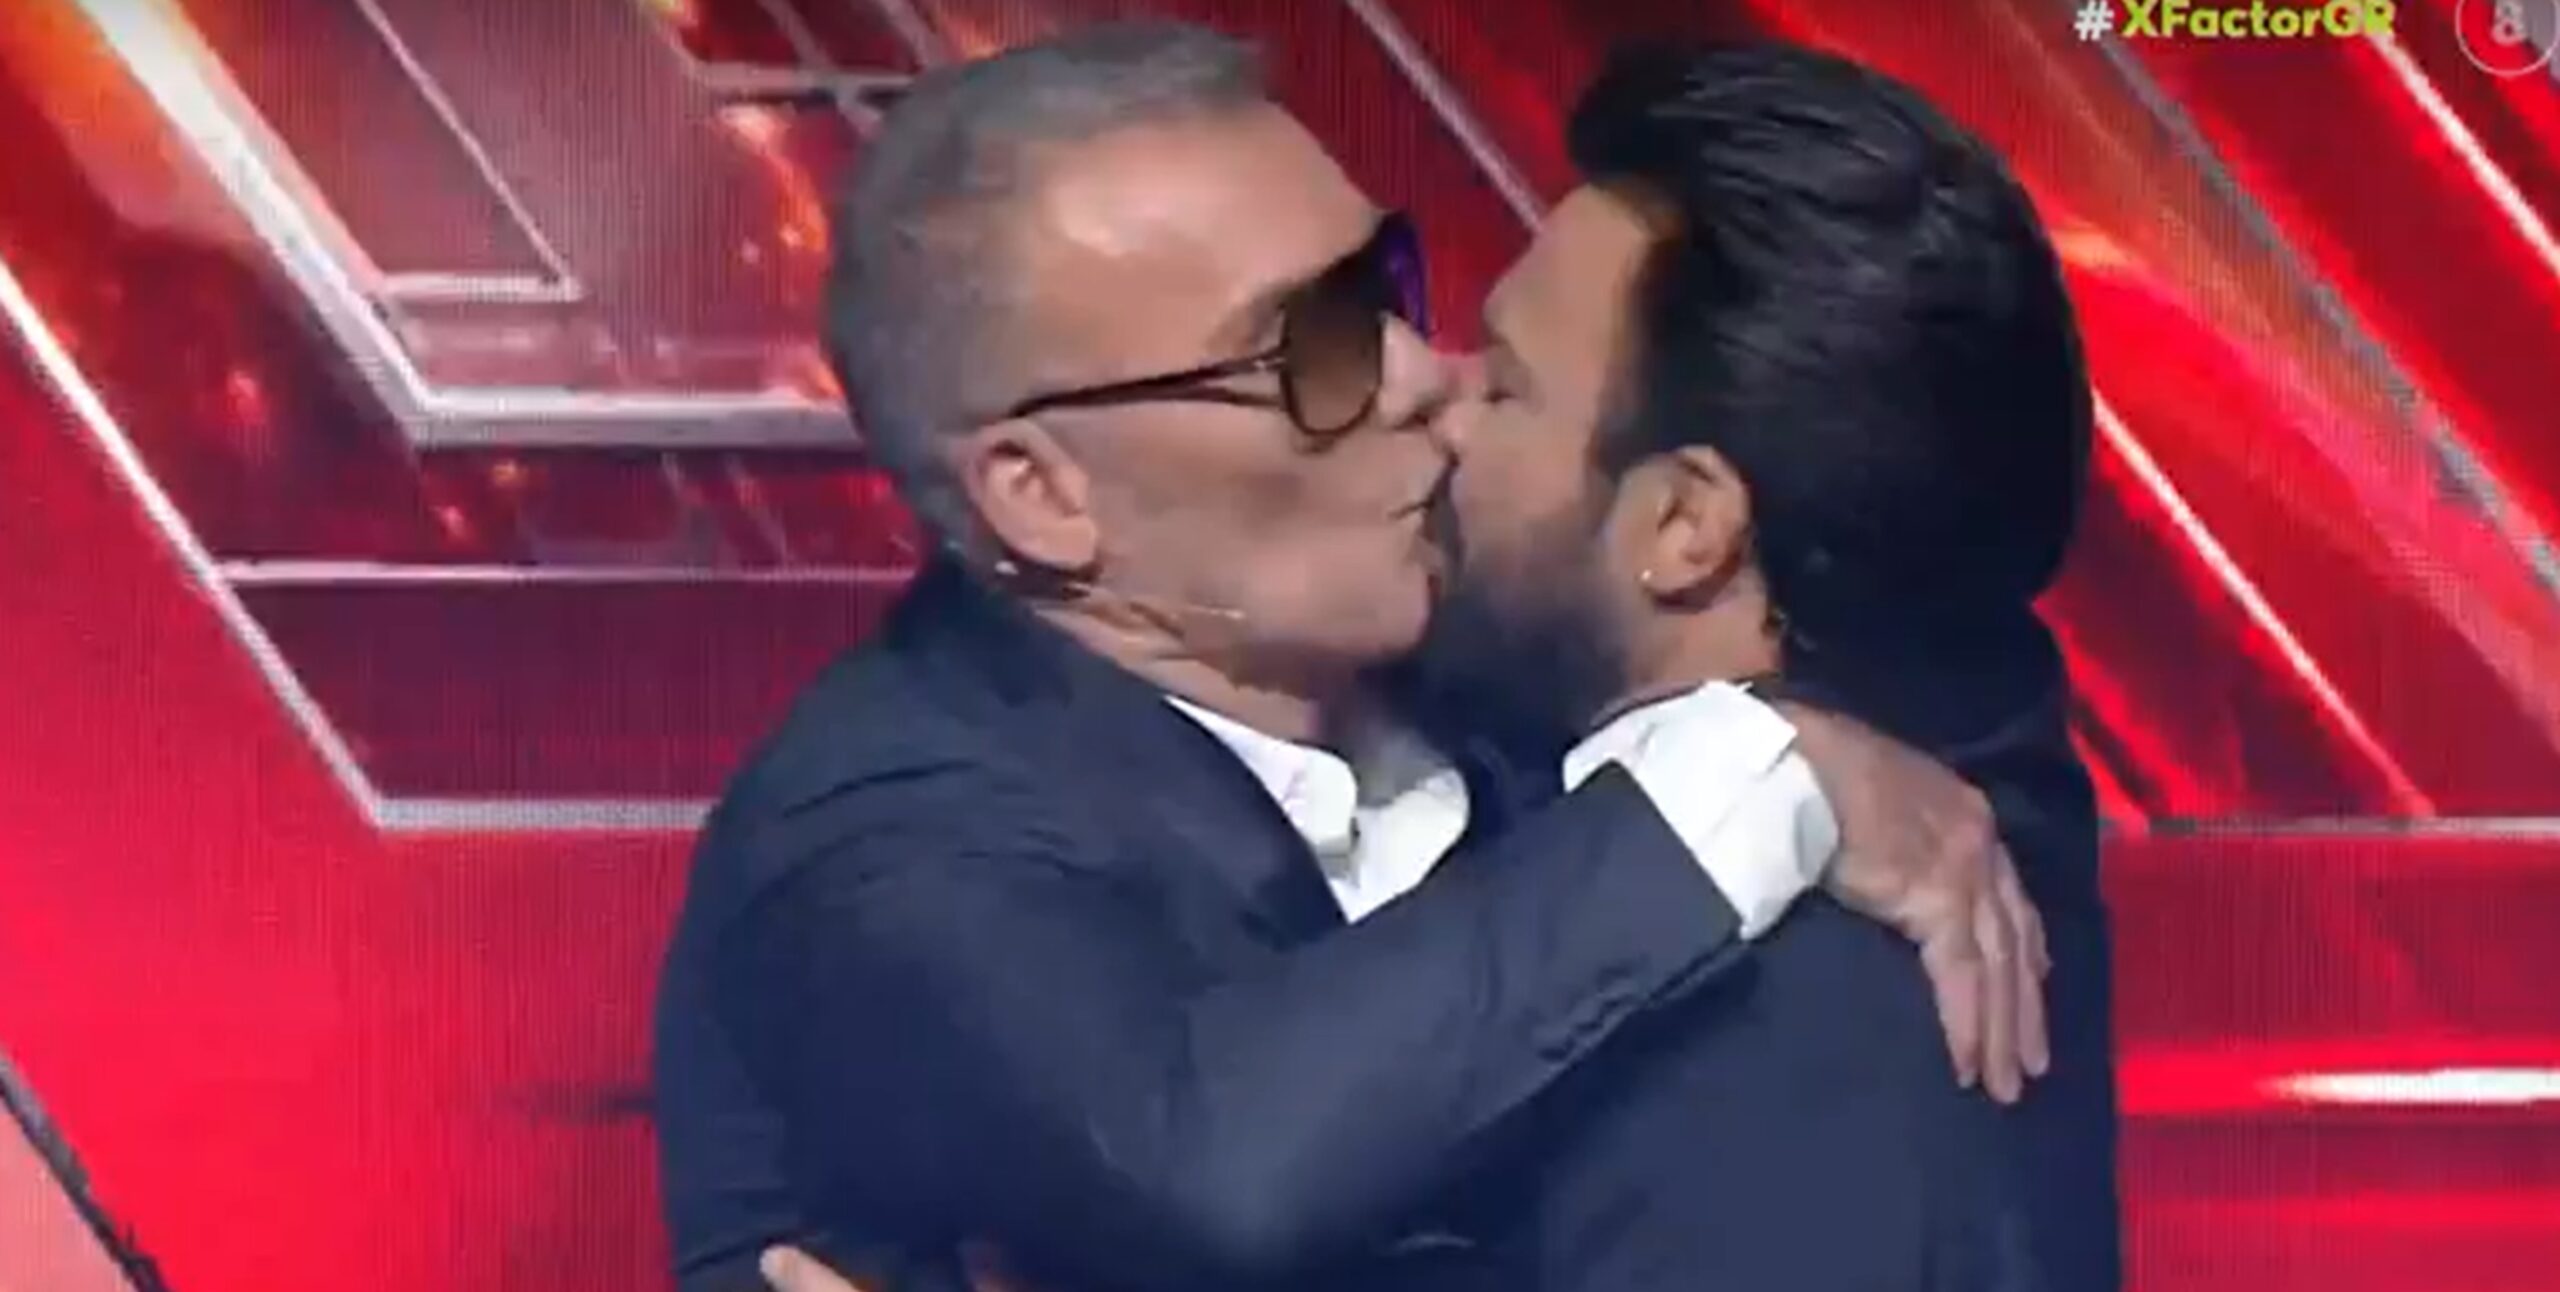 X-Factor: Ο Στέλιος Ρόκκος αιφνιδίασε τον Ανδρέα Γεωργίου -Τον φίλησε στο στόμα